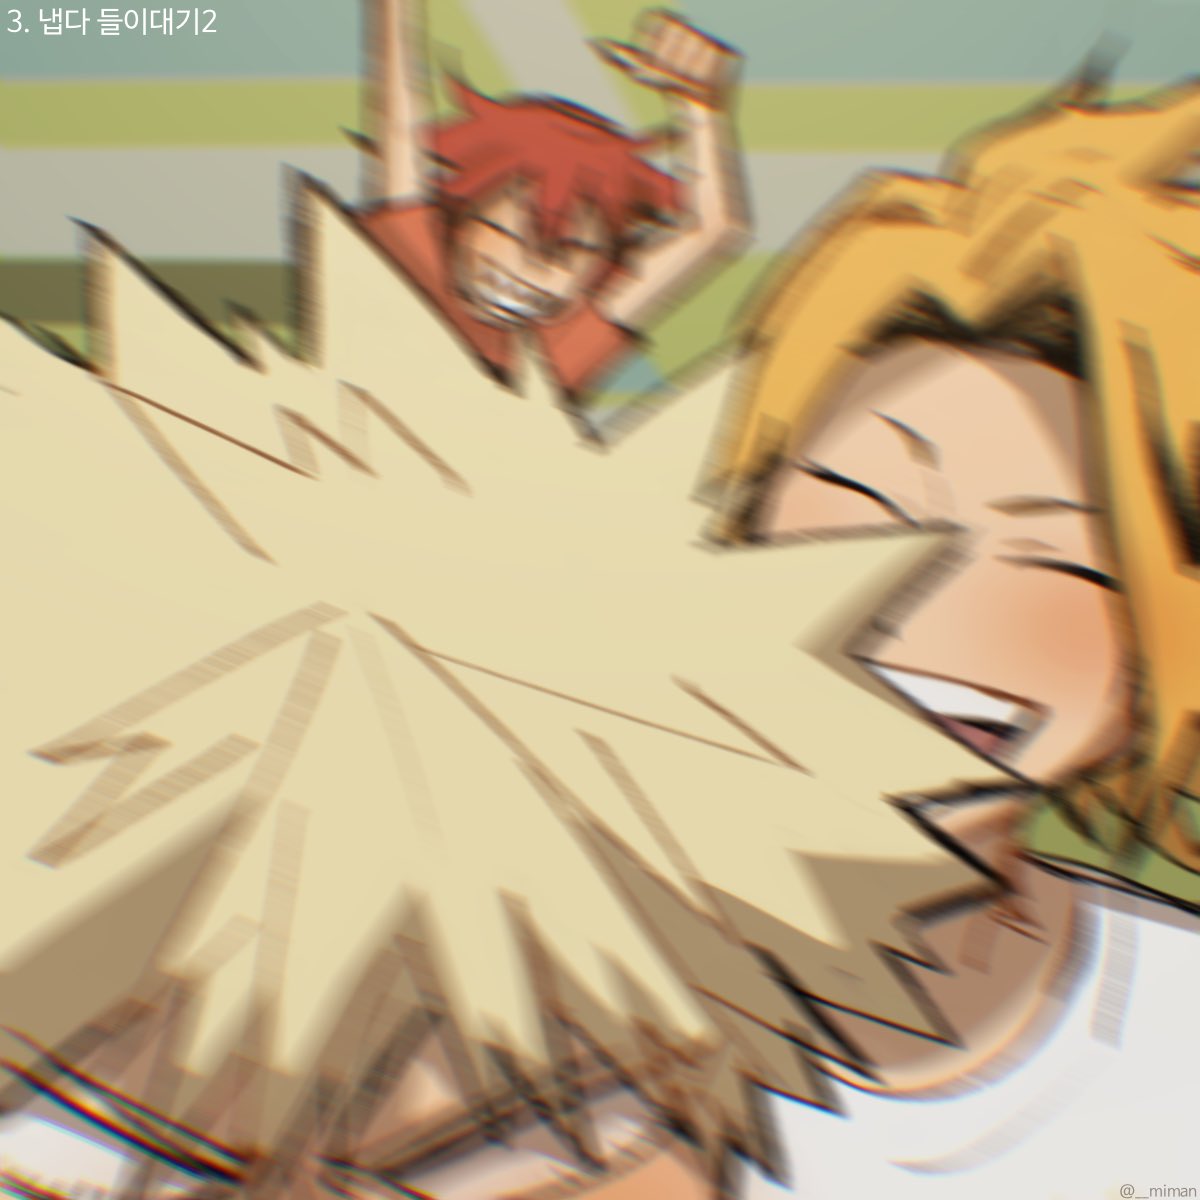 bakugou katsuki multiple boys red hair shirt spiked hair 2boys blonde hair white background  illustration images